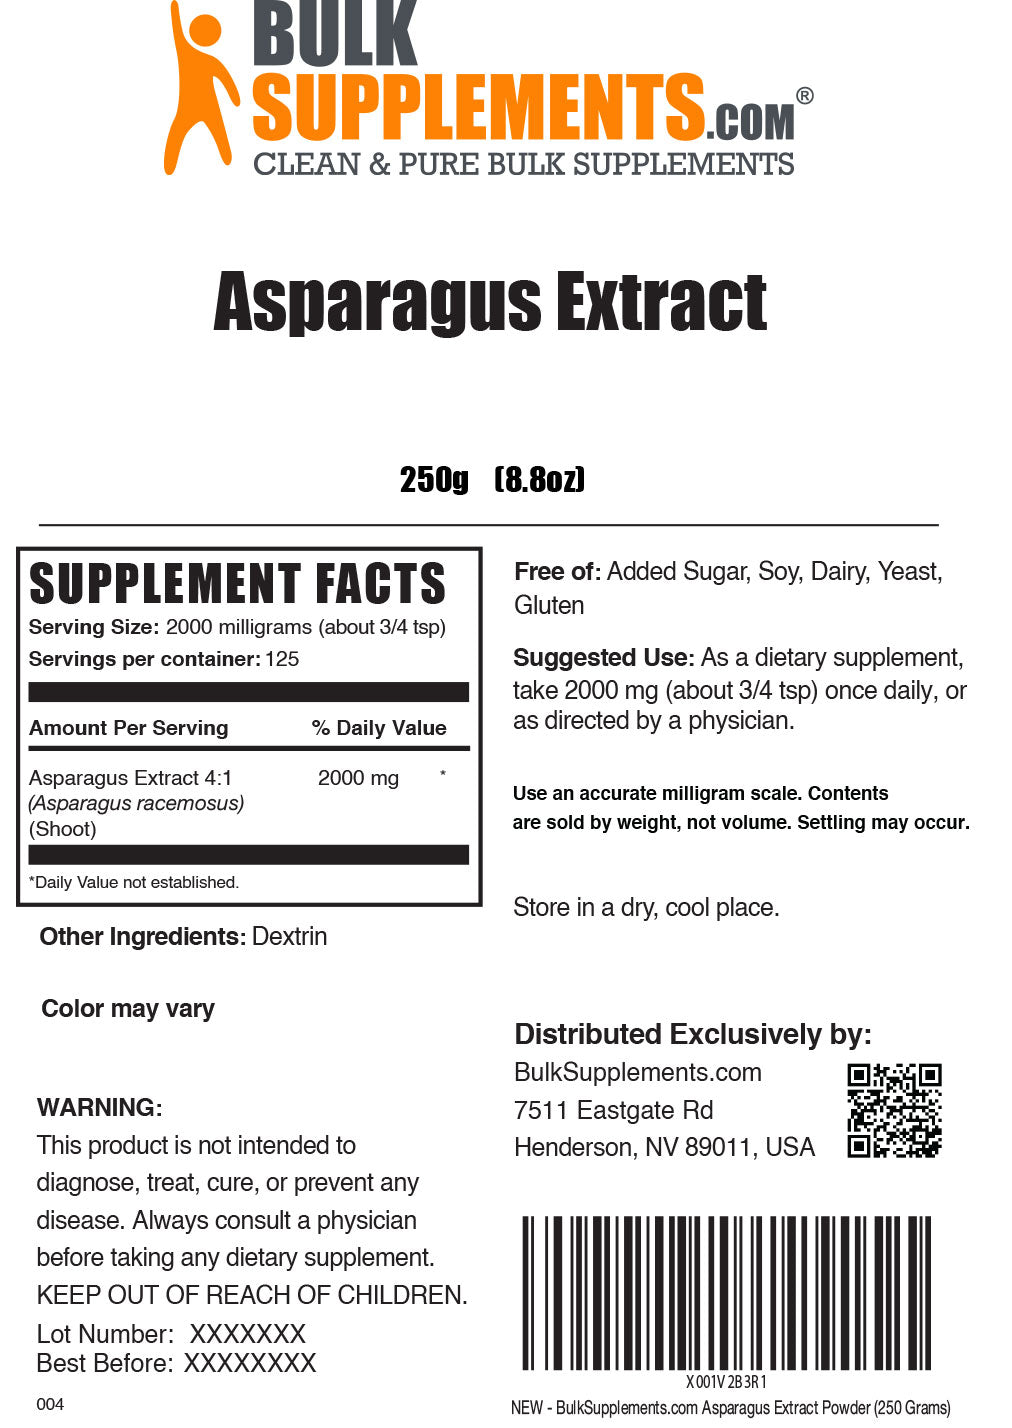 Asparagus Extract Powder